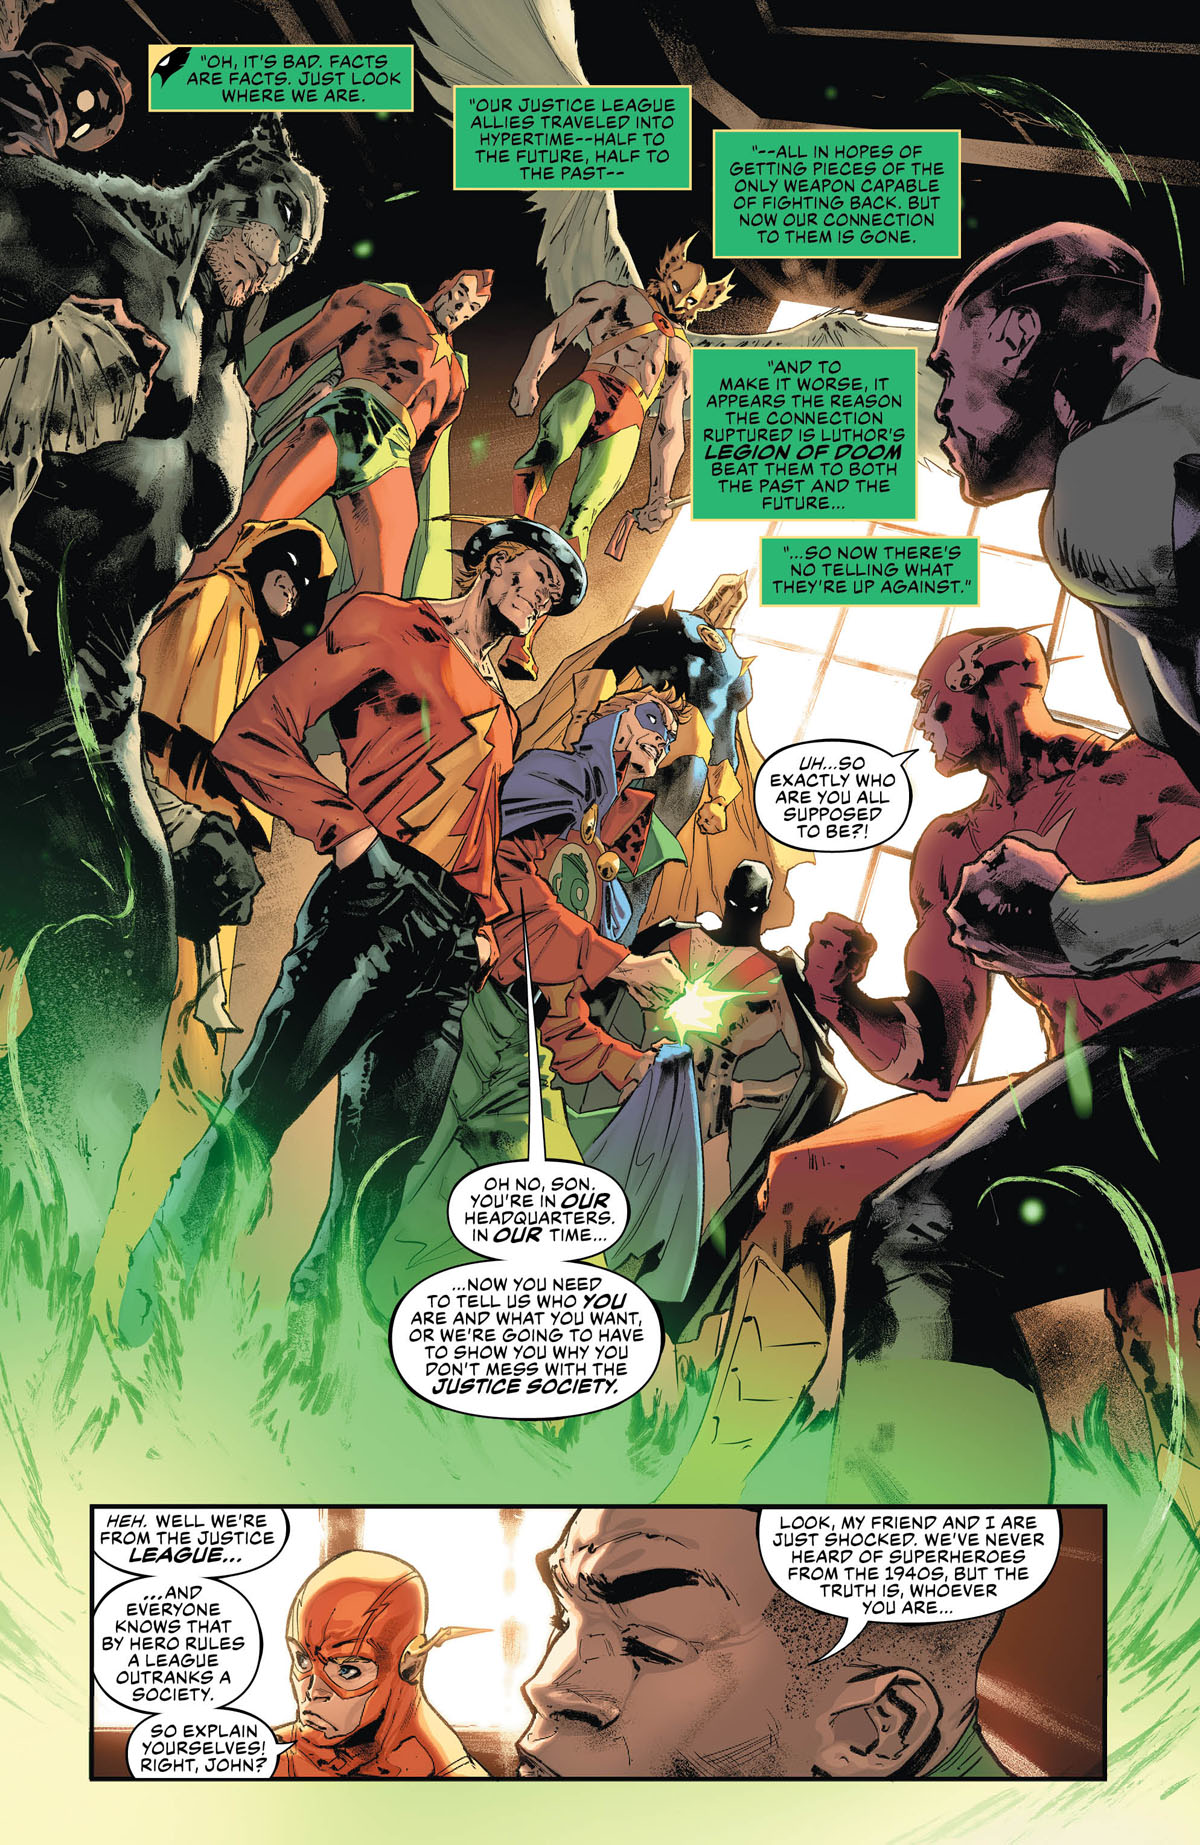 Justice League #31 page 2